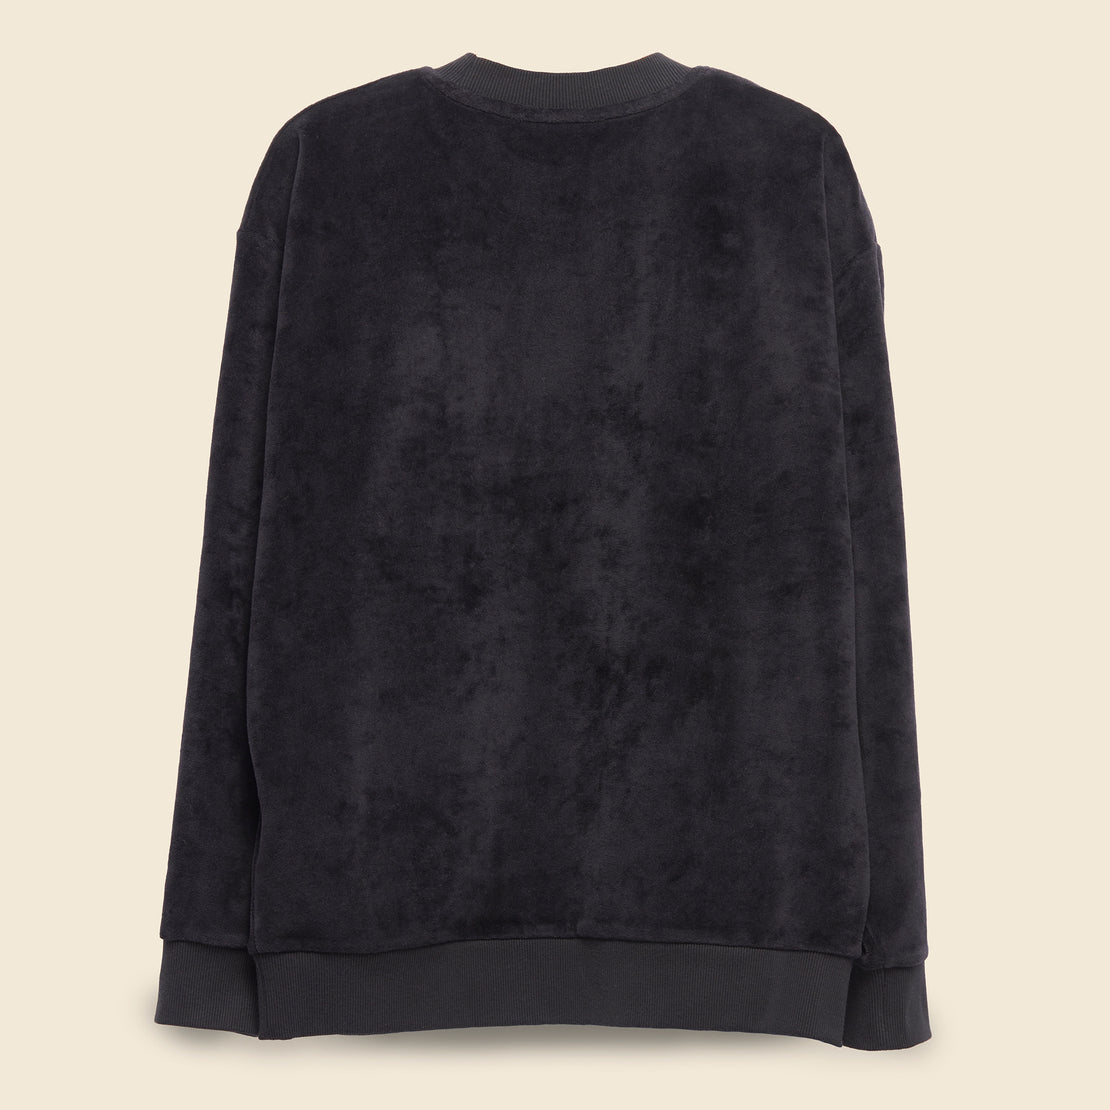 Silverton Sweatshirt - Black - Carhartt WIP - STAG Provisions - W - Tops - L/S Fleece